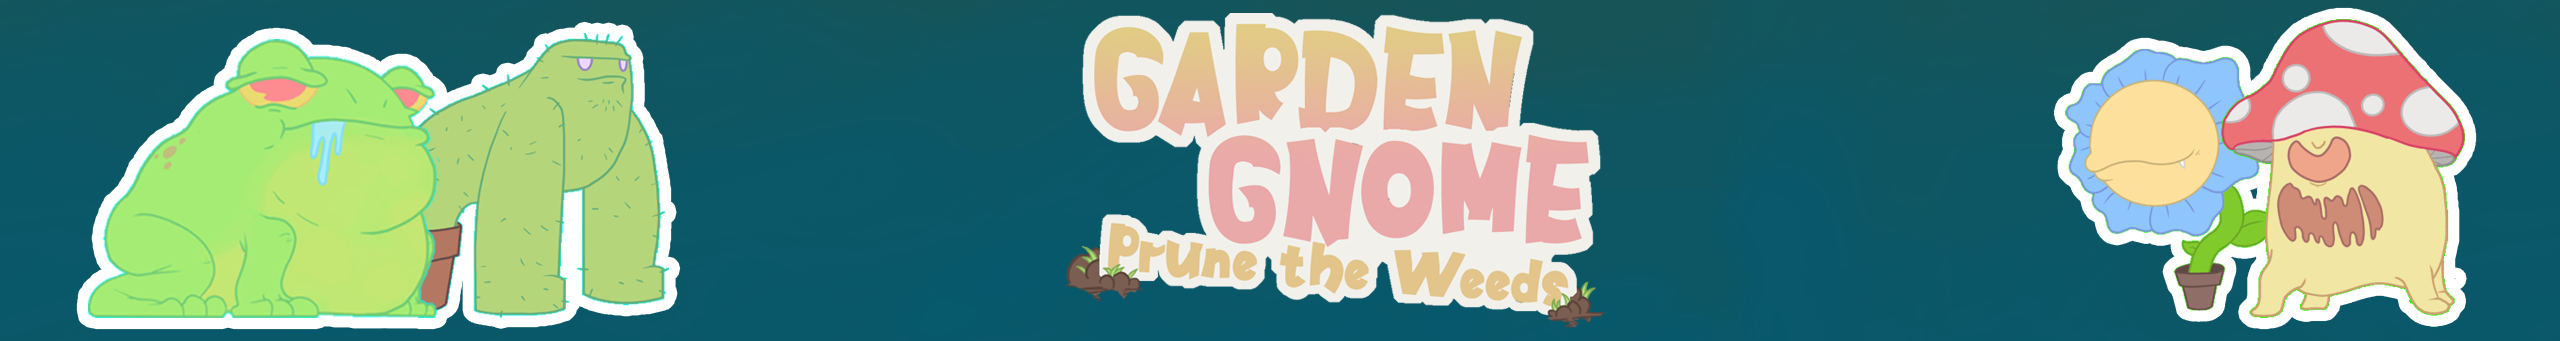 Garden Gnome: Prune the Weeds